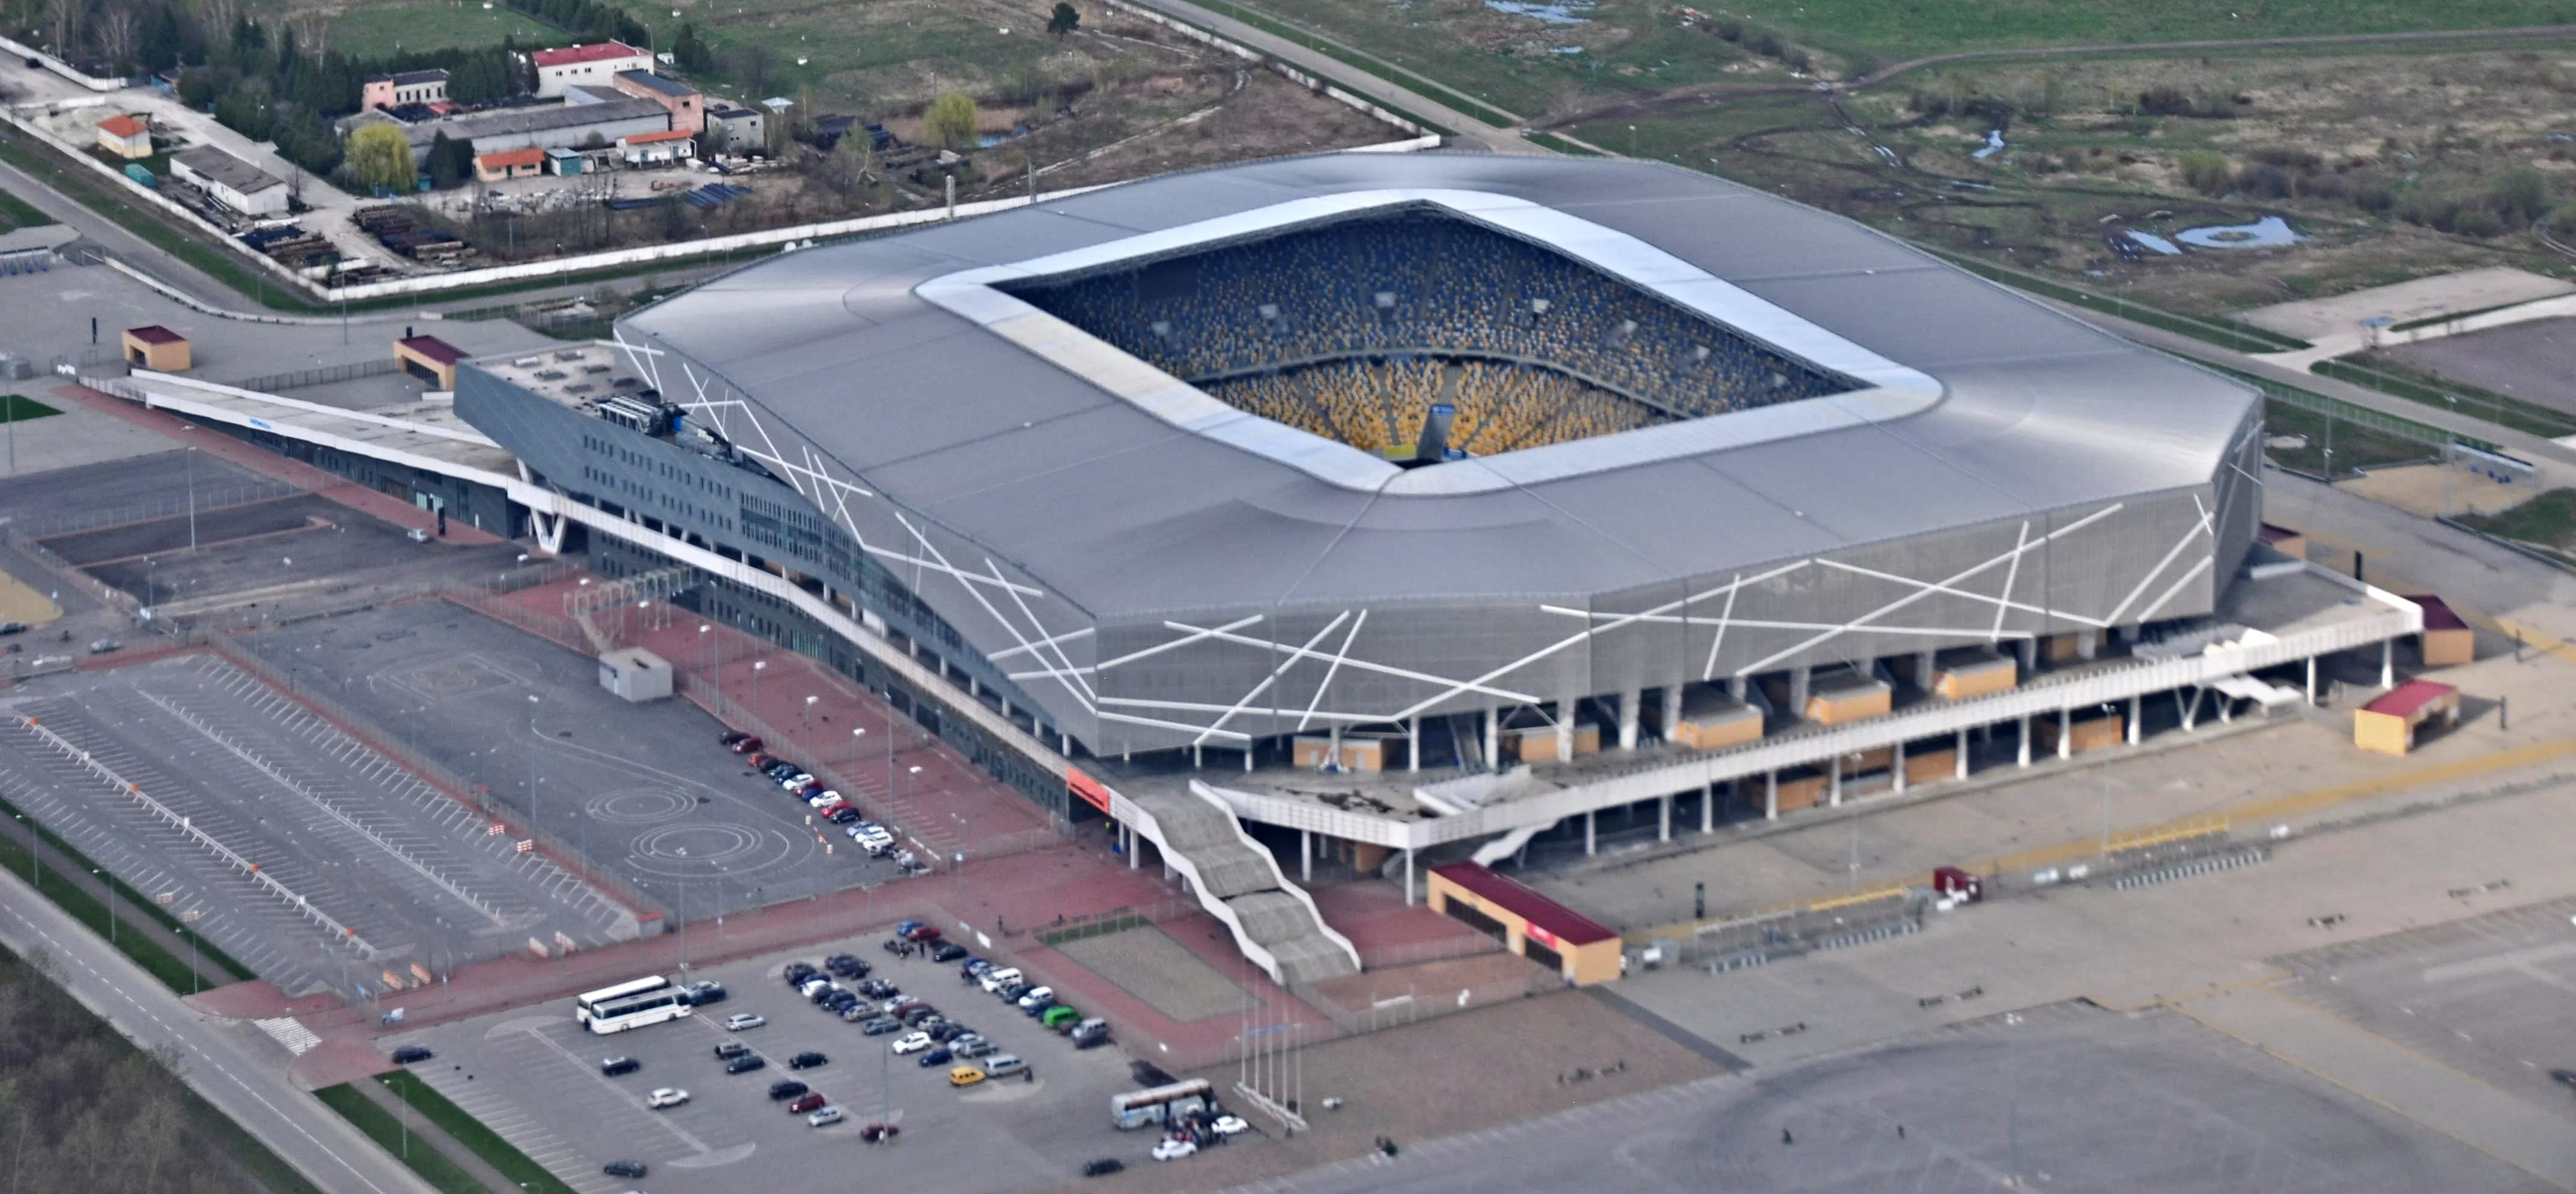 Arena Lviv in Ukraine, Europe | Football - Rated 4.2